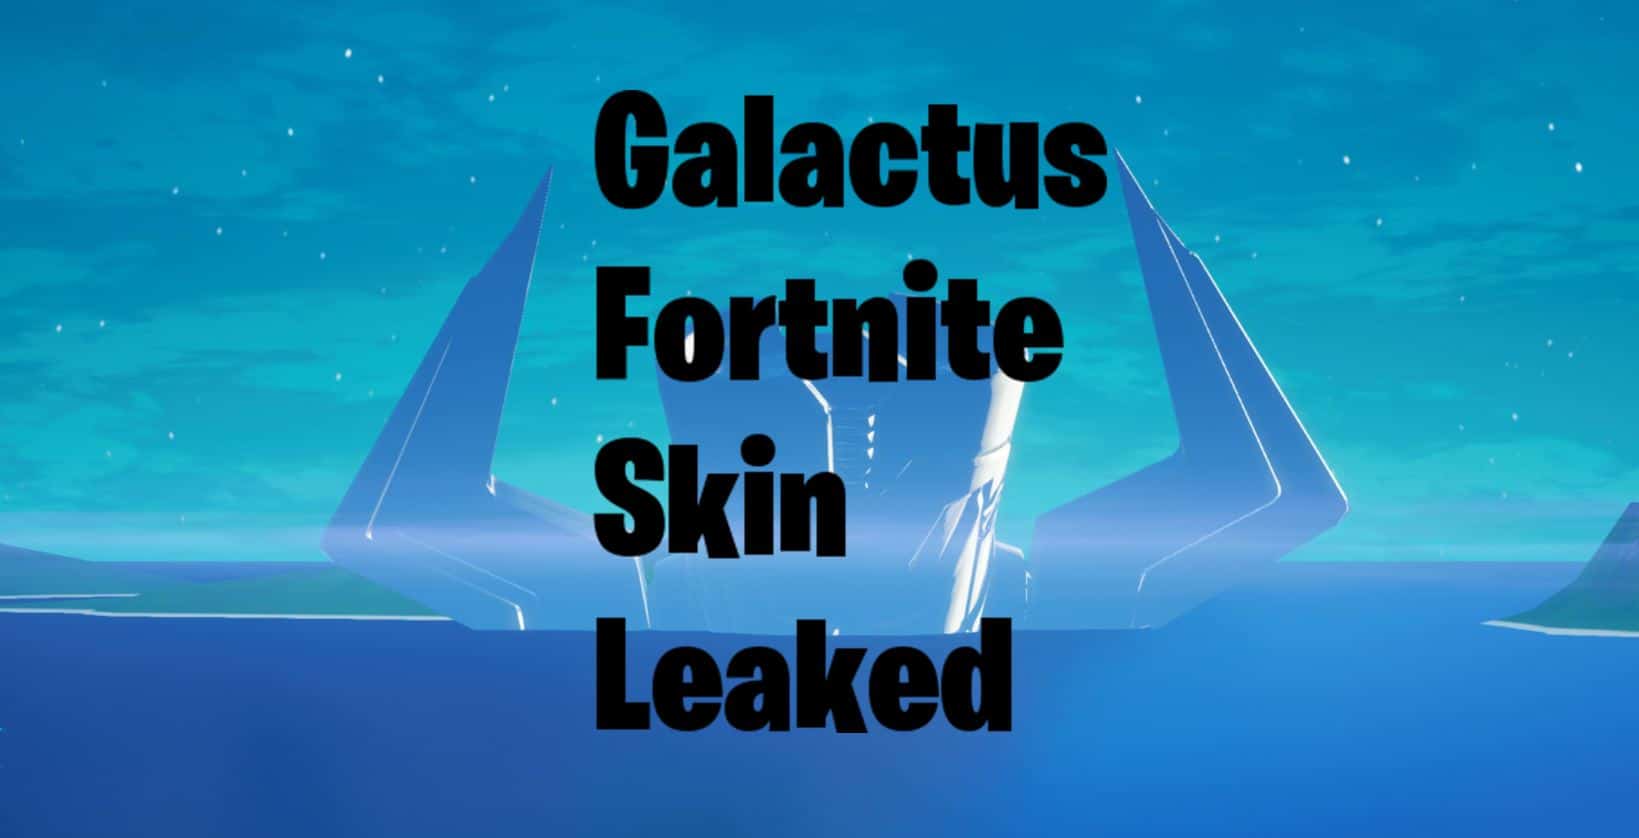 Fortnite Galactus Event Skin Leaked